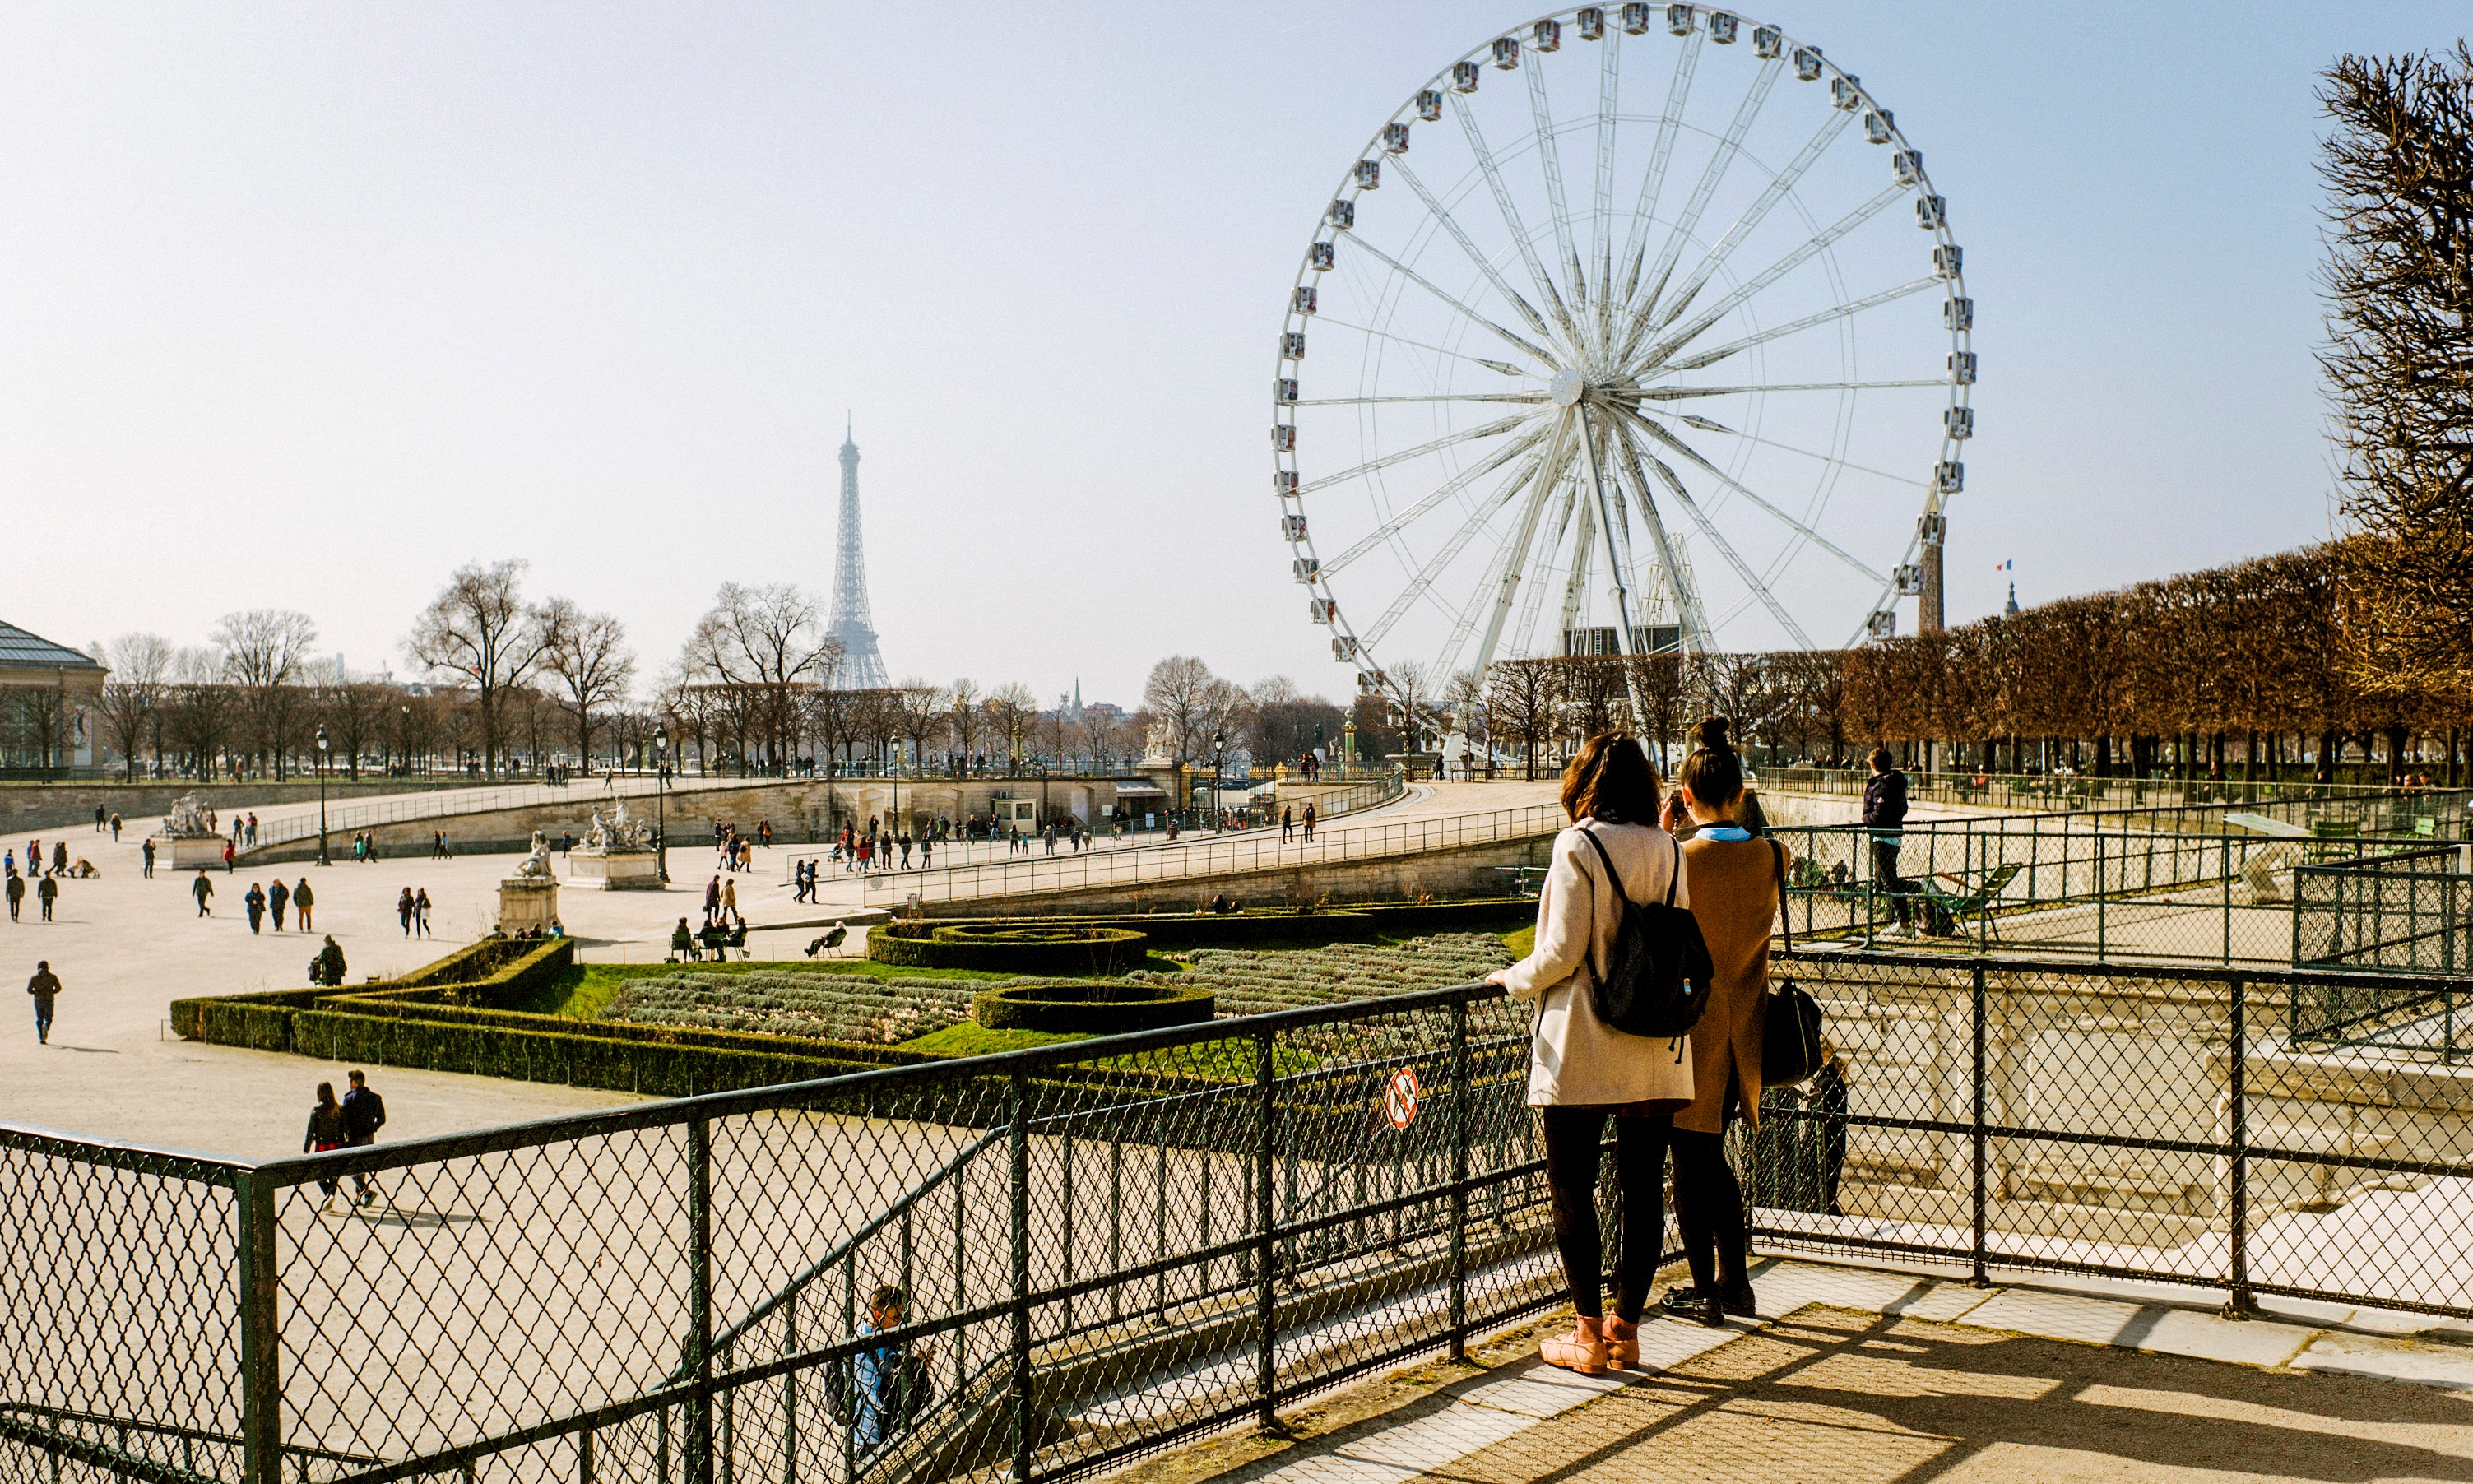 Paris Vacation Rentals | Cottage and Apartment Rentals | Airbnb